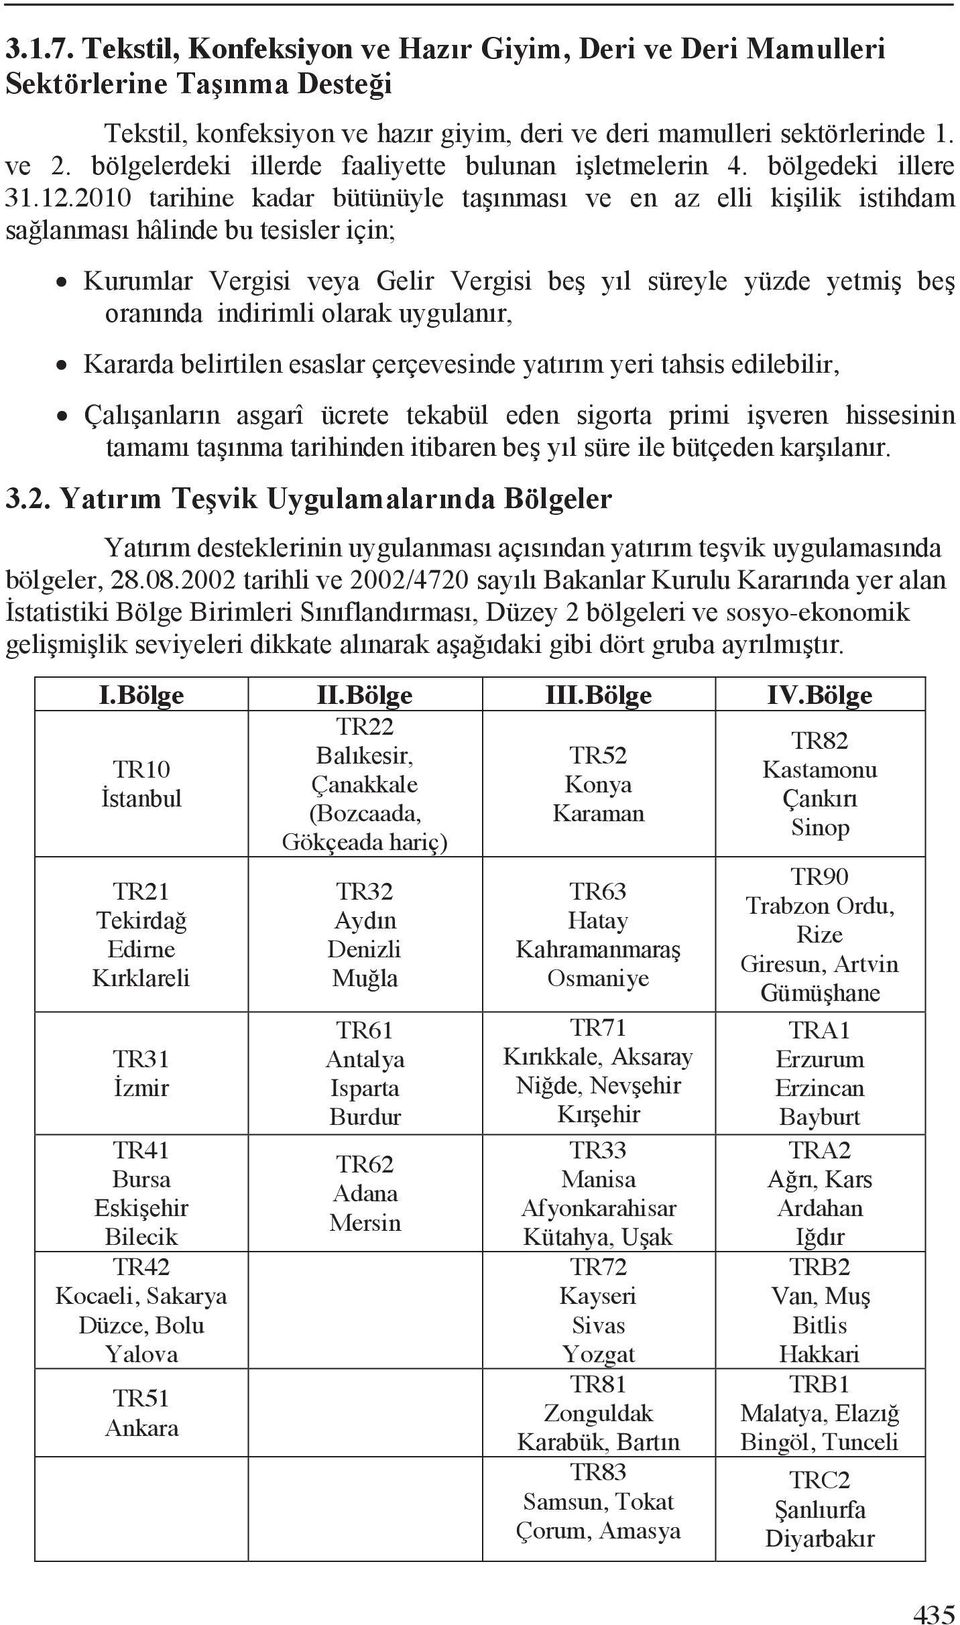 Bolu Yalova TR51 Ankara TR32 Denizli TR61 Antalya Isparta Burdur TR62 Adana Mersin TR63 Hatay Osmaniye TR71 TR33 Manisa Afyonkarahisar TR72 Kayseri Sivas